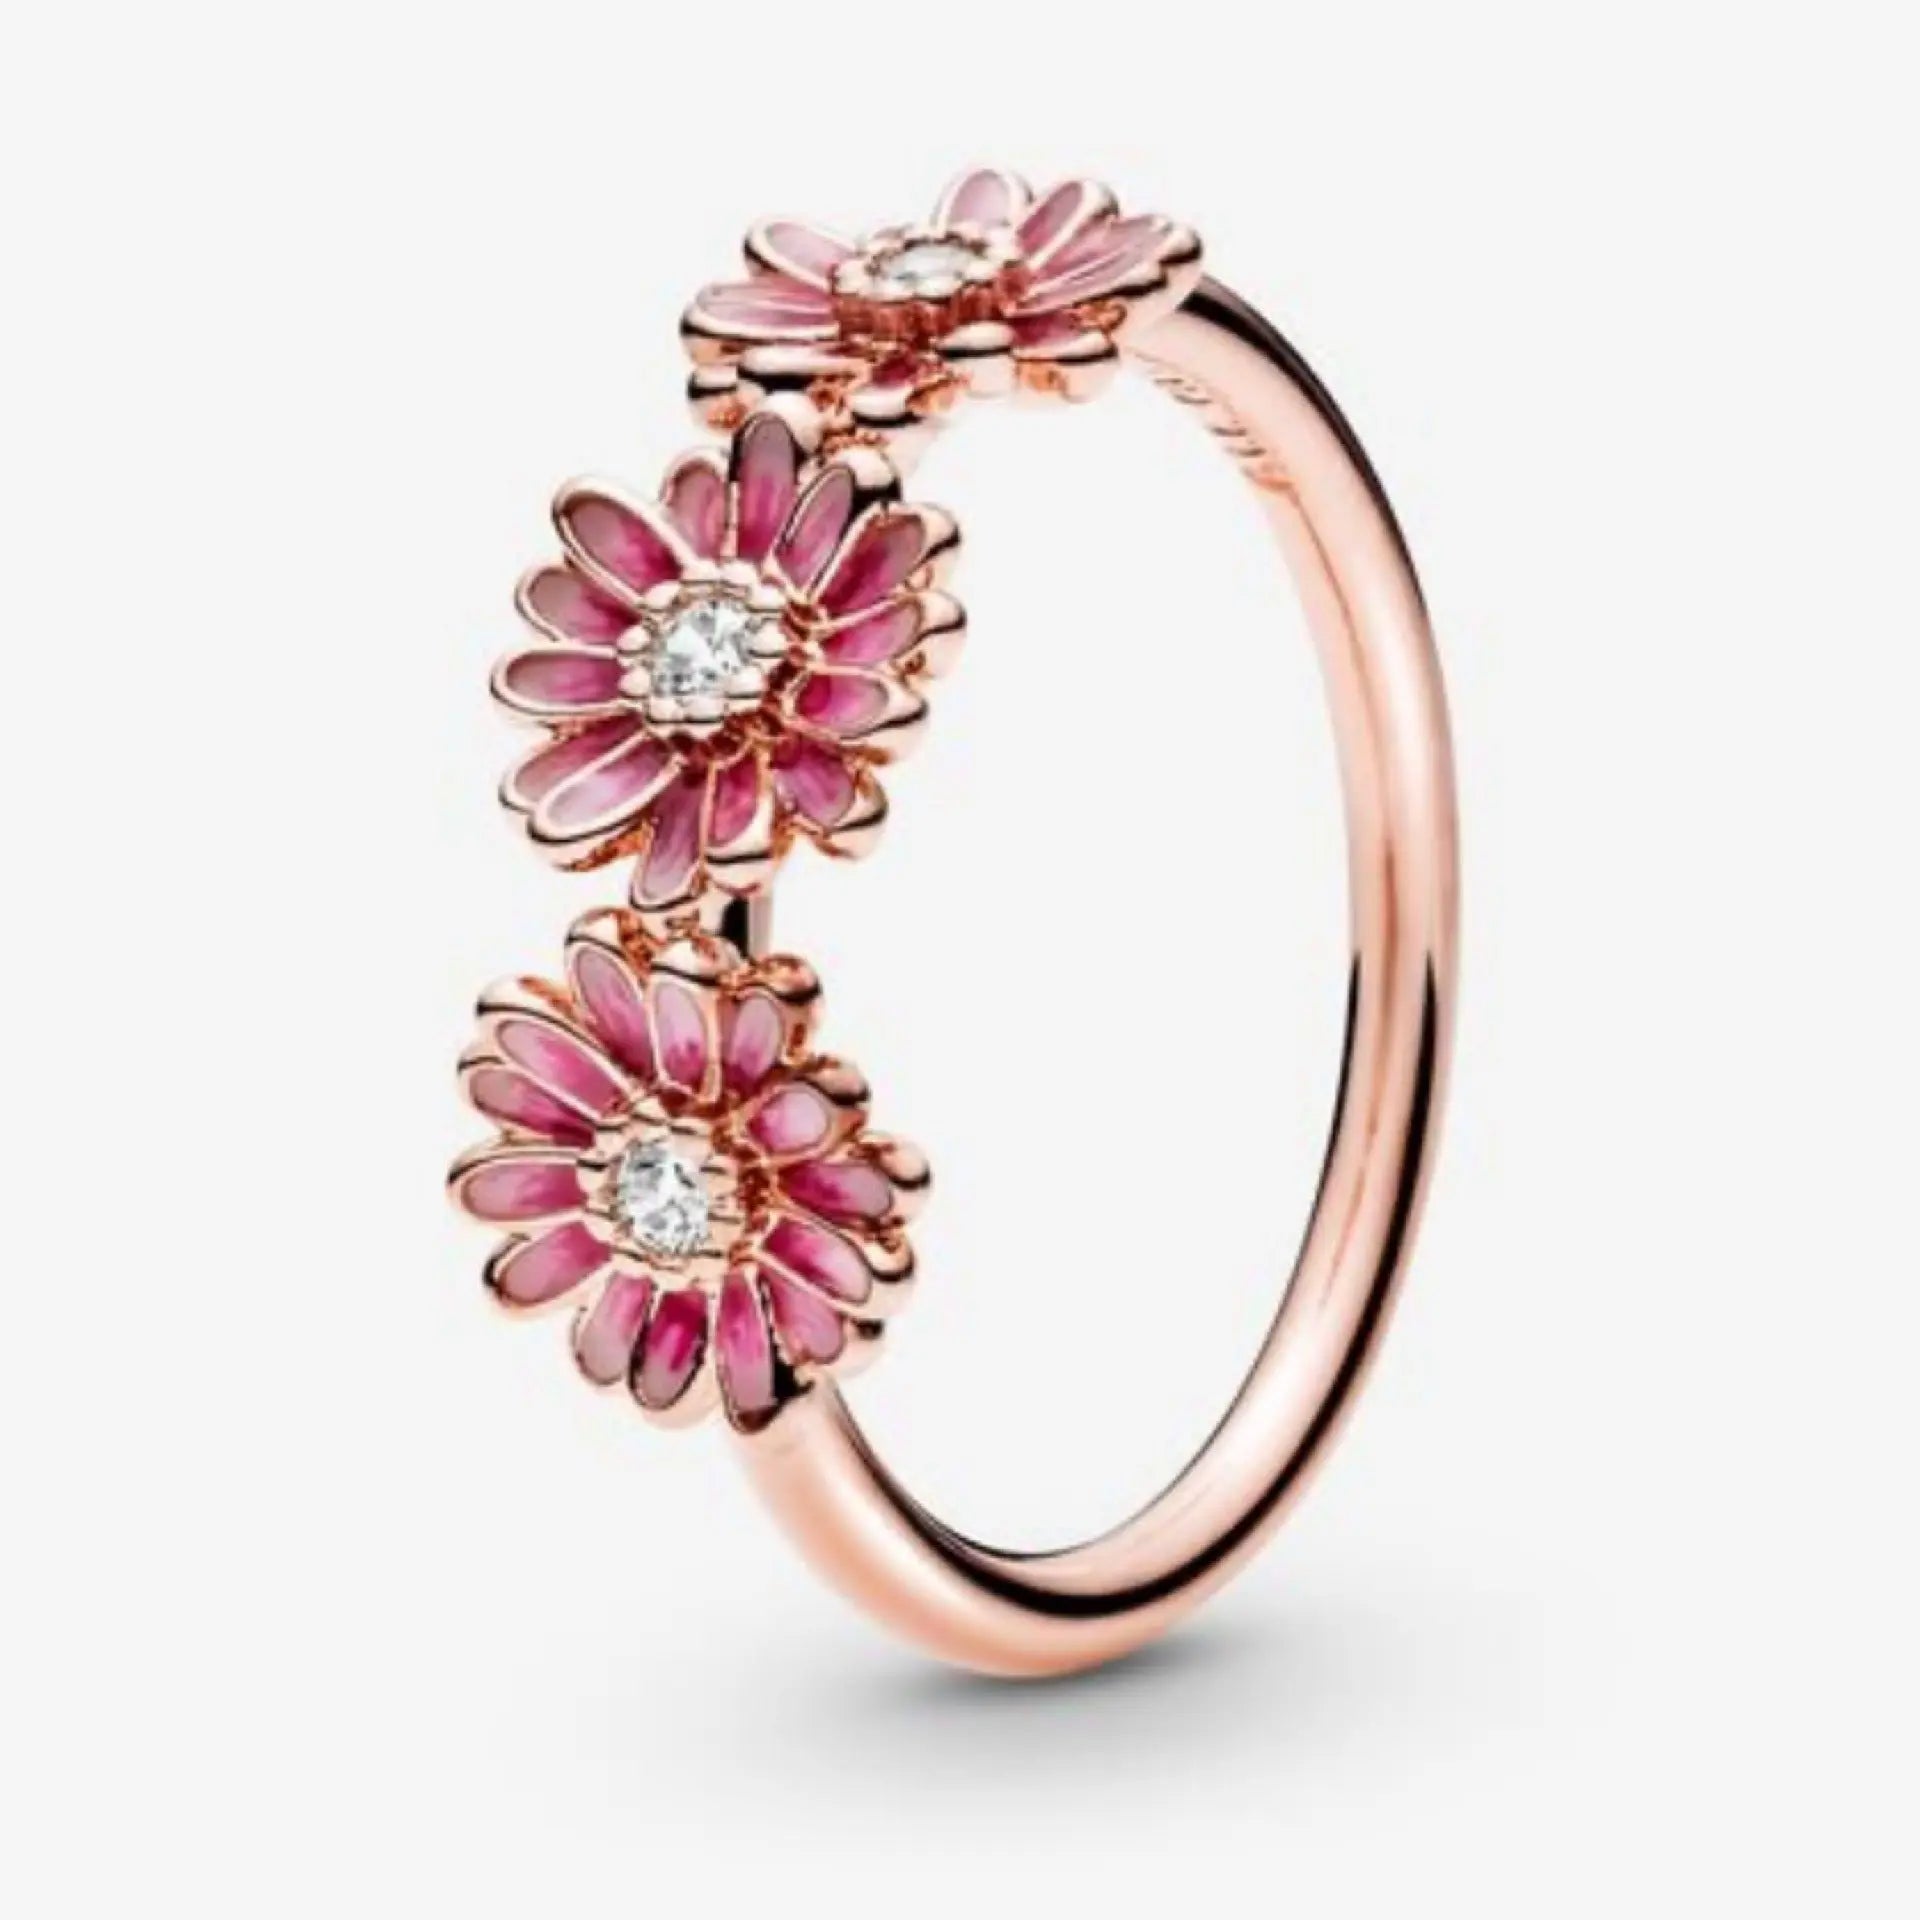 Pandora Pandora Daisy FlowerTrio Ring, Pink Danson Jewelers Danson Jewelers 